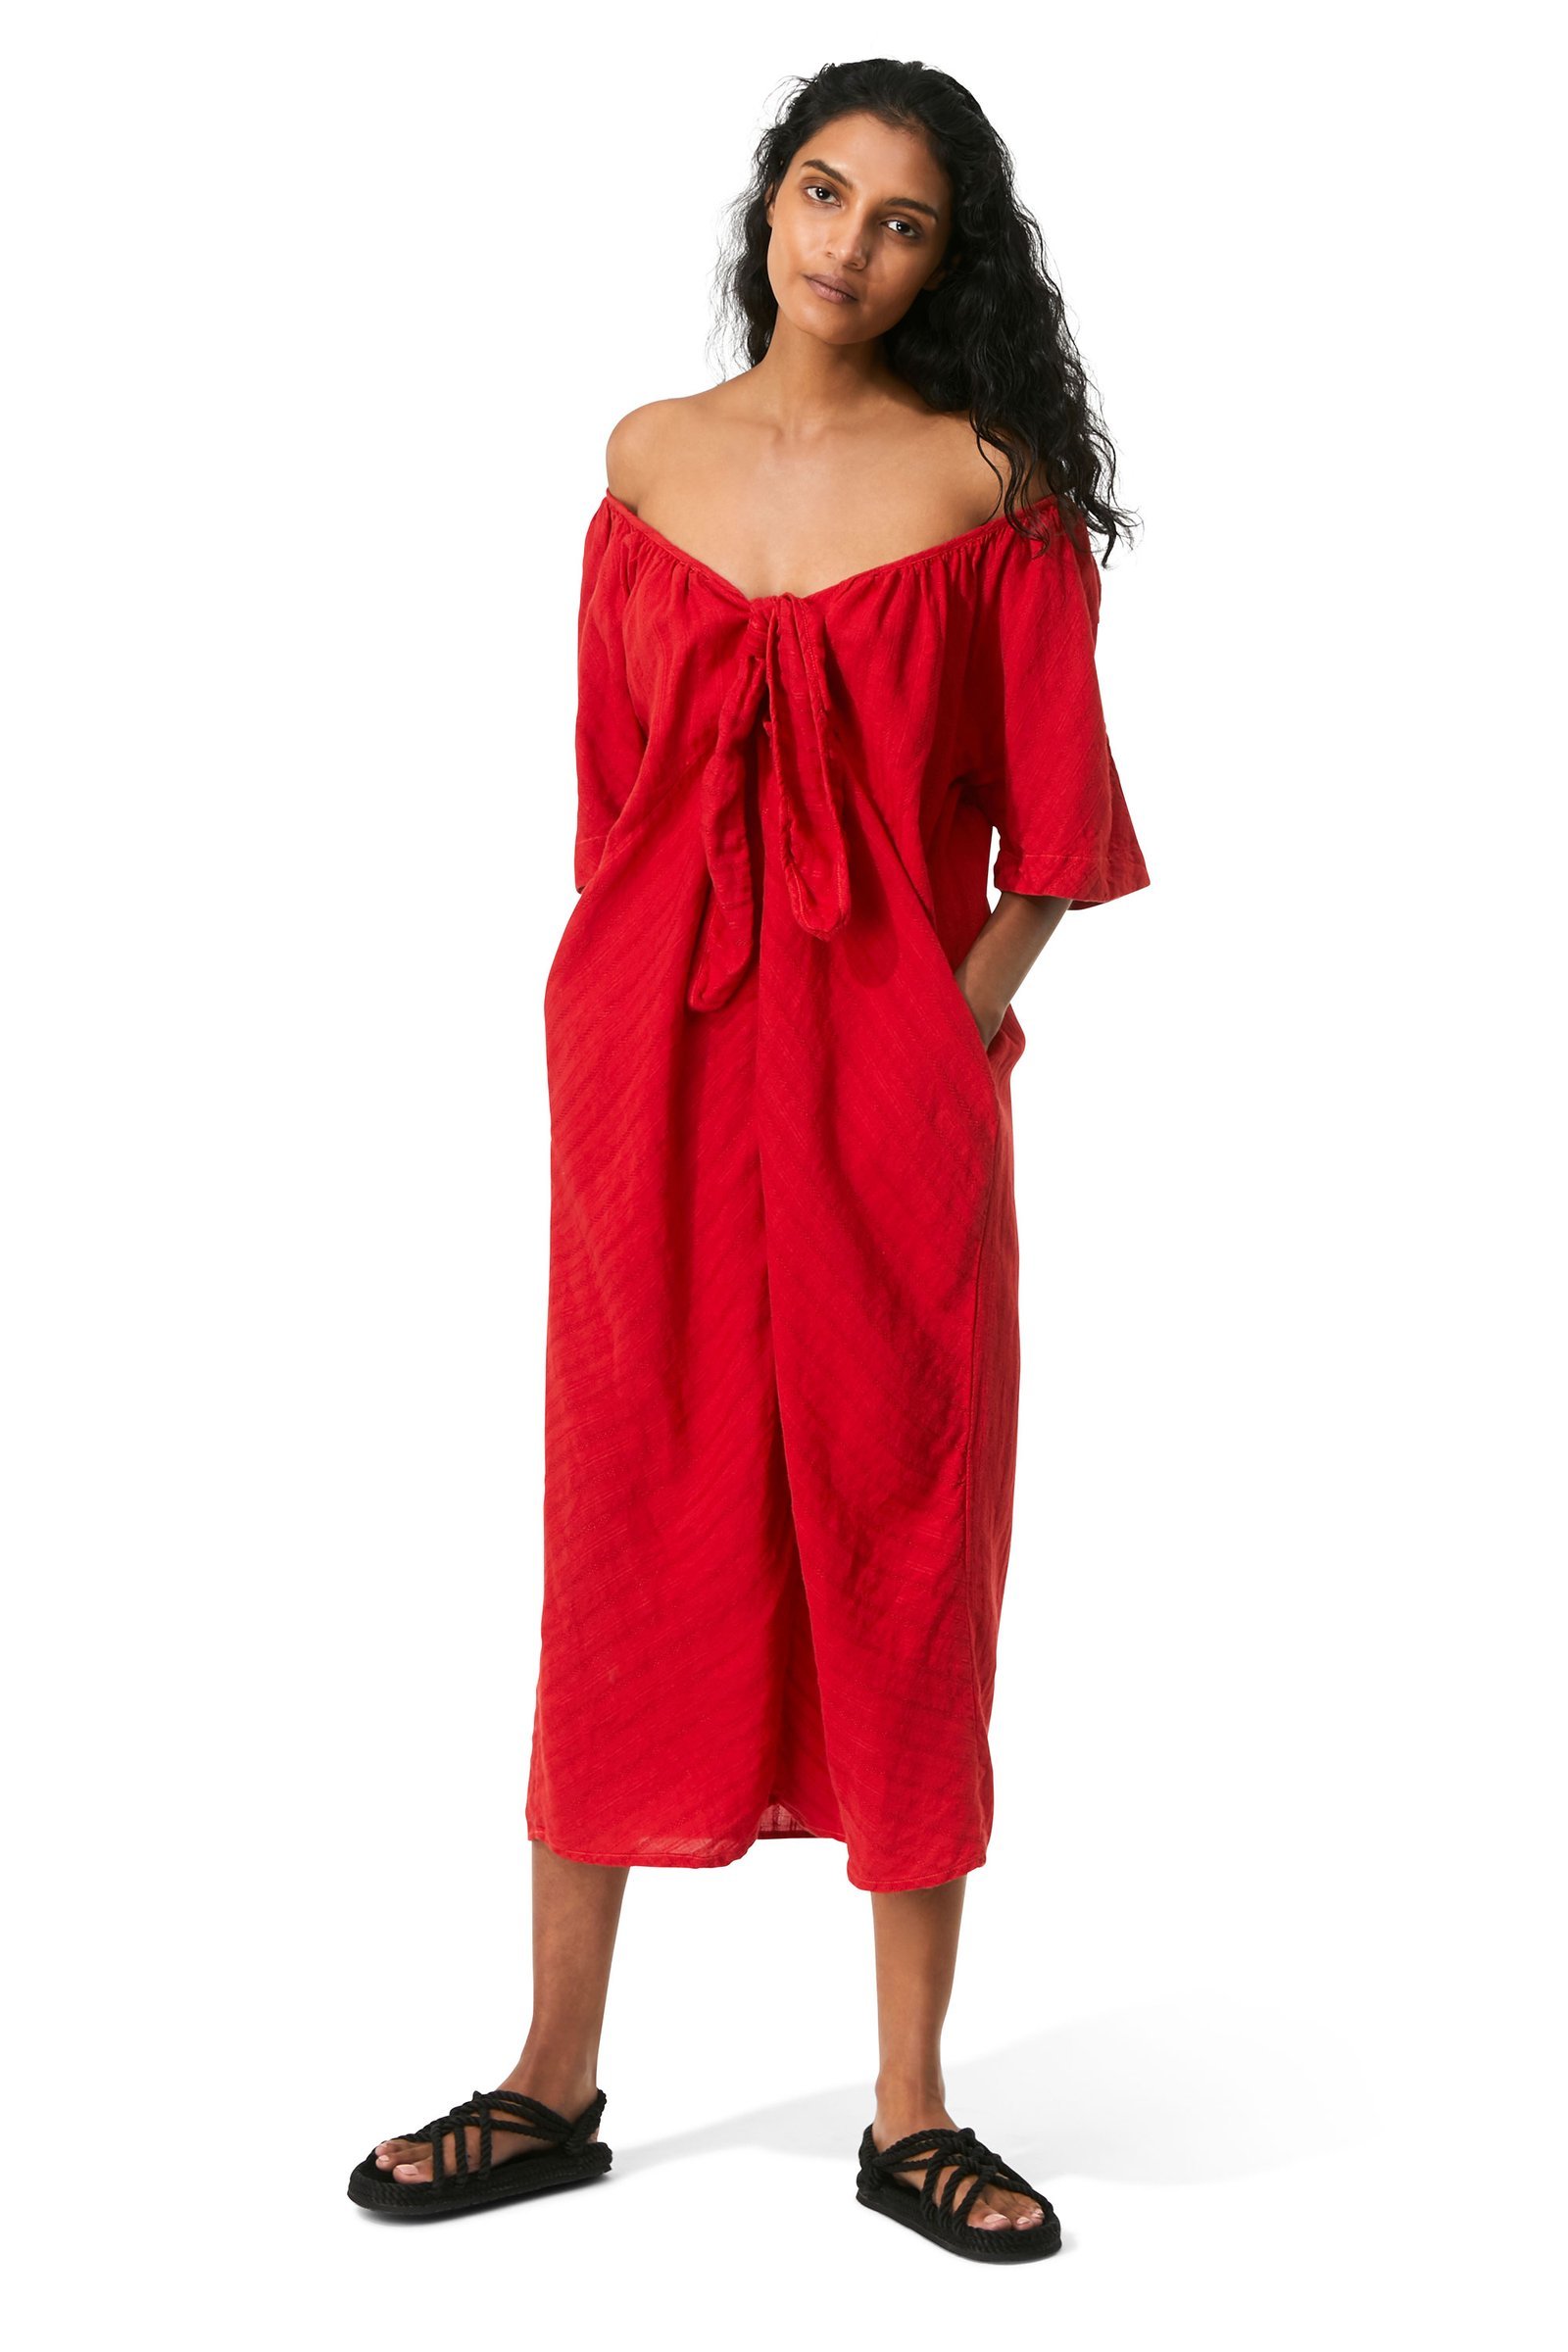 aliz dress - red